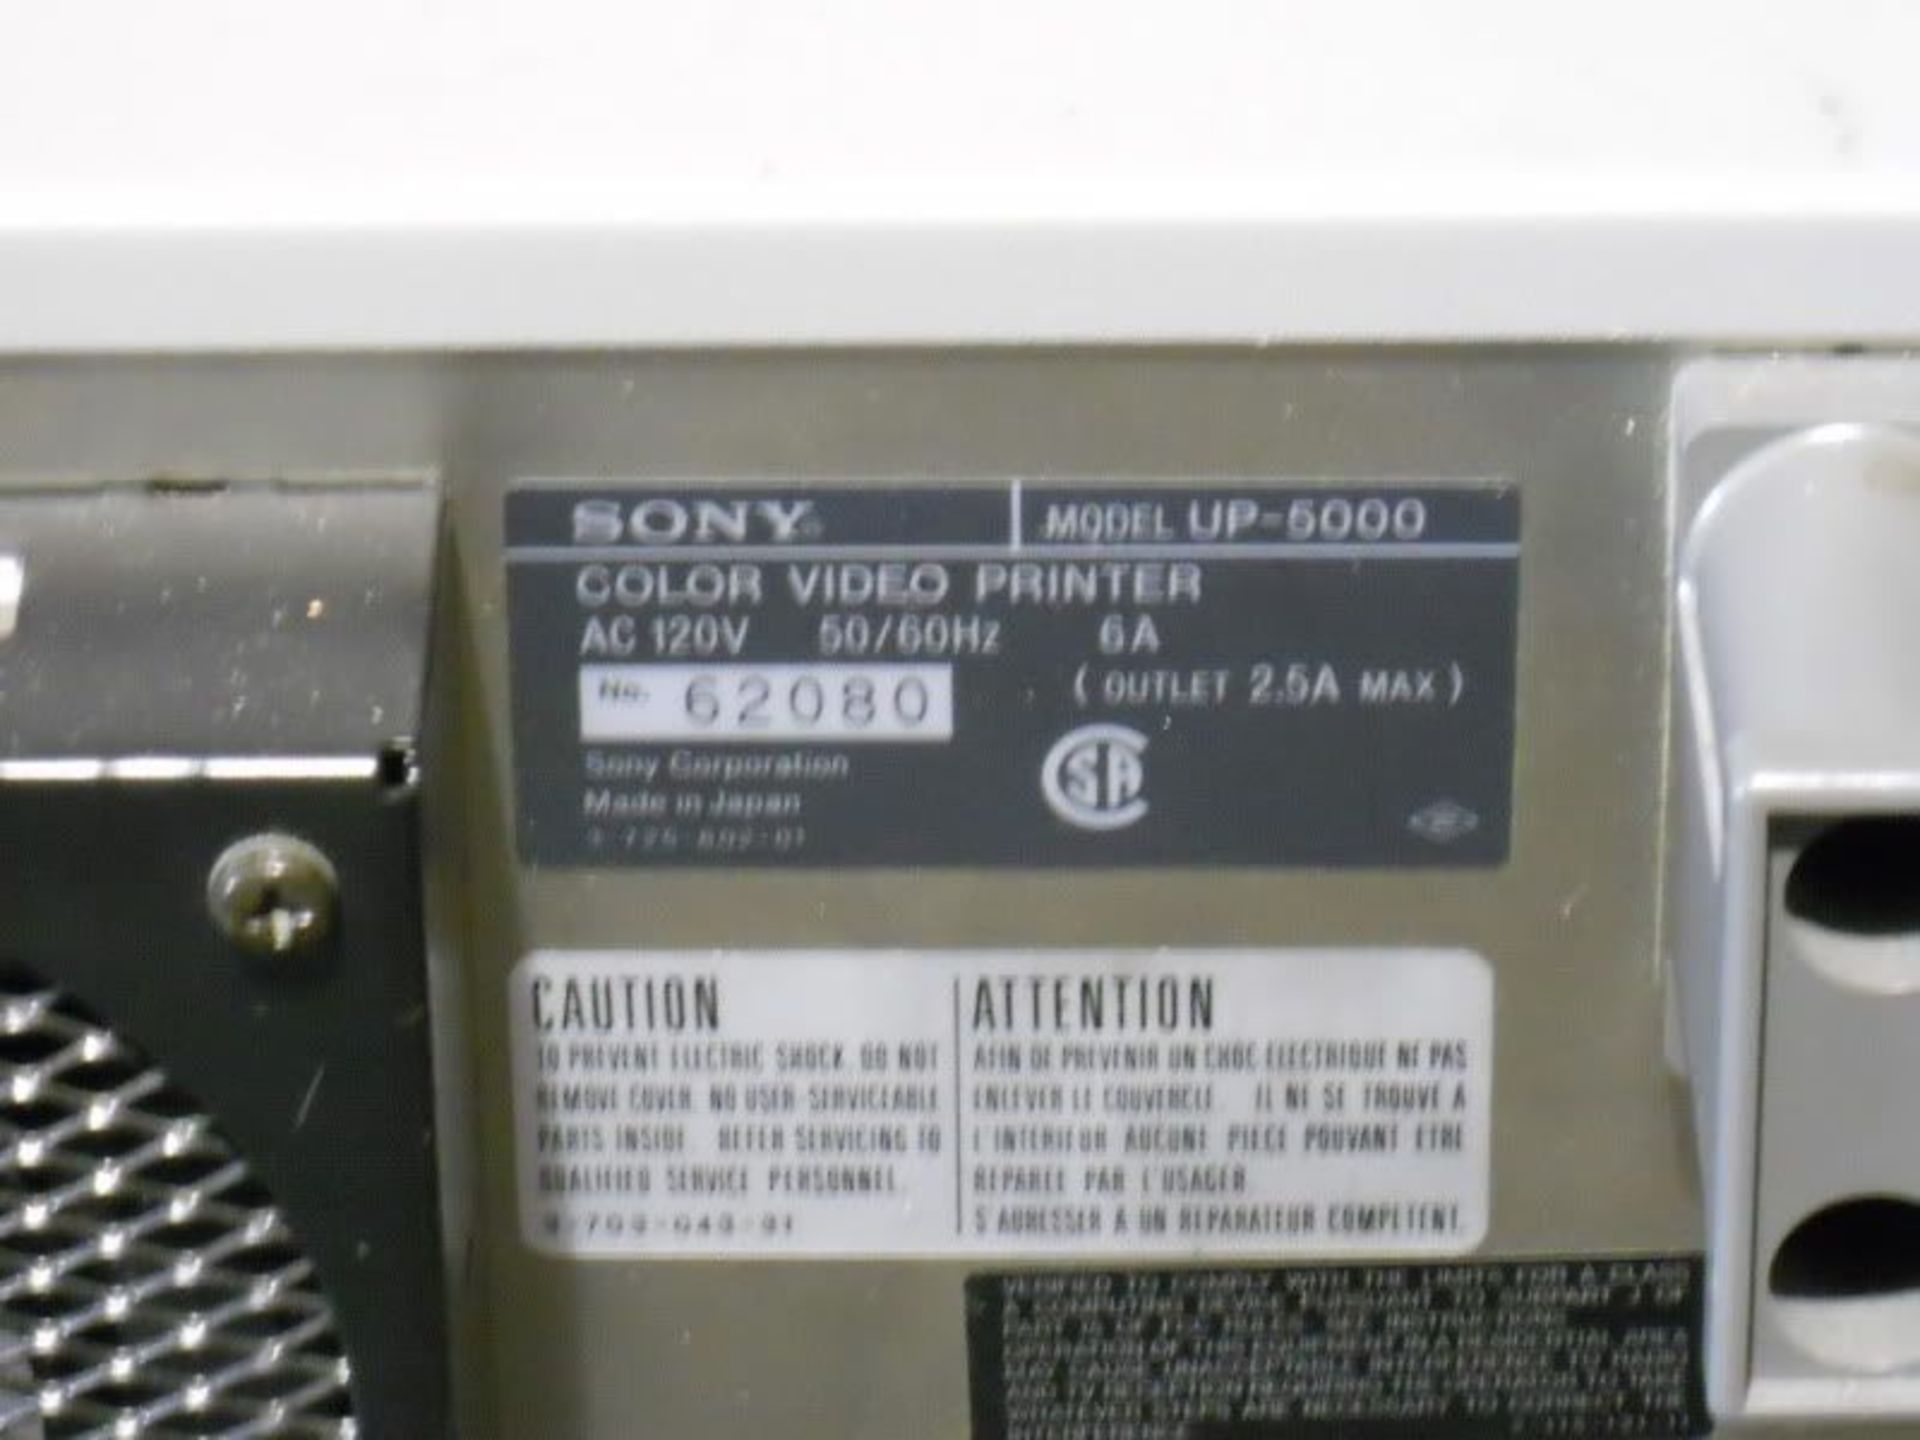 Sony Mavigraph Color Video Printer UP5000, Qty 1, 321469009610 - Image 11 of 11